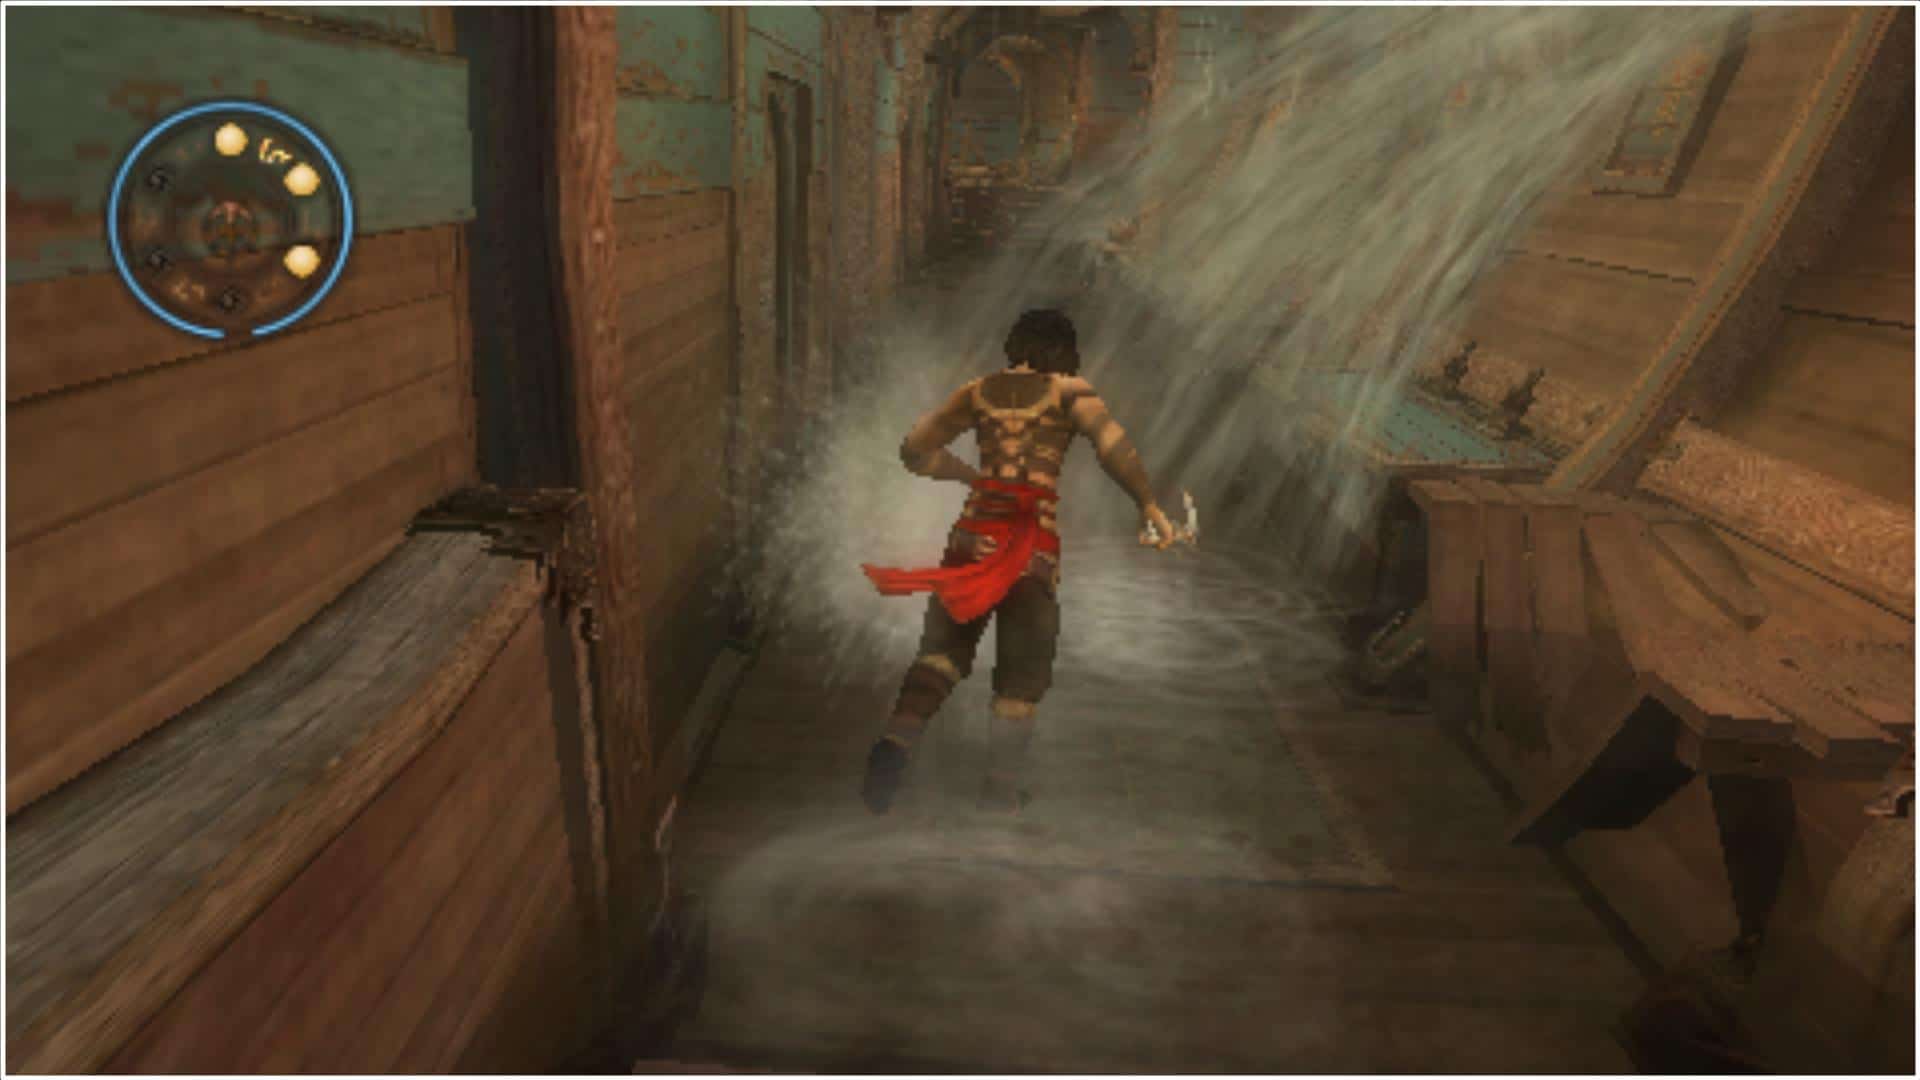 Prince of Persia Revelations - PSP - PSP - Feature - HEXUS.net